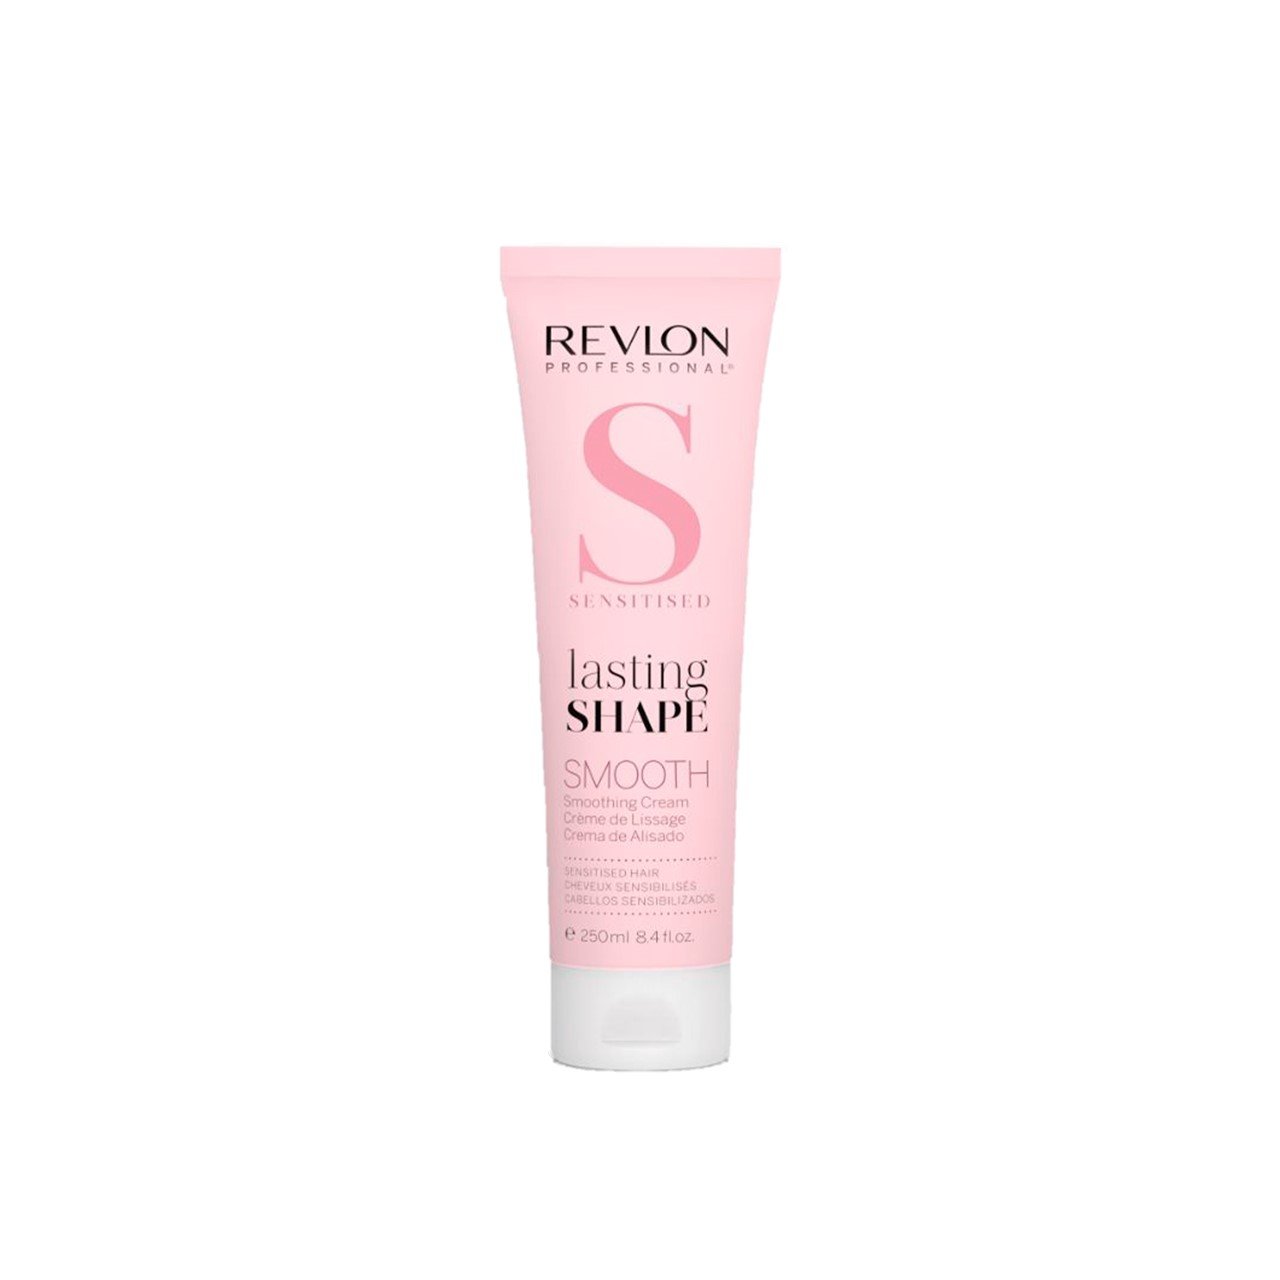 Revlon Professional Lasting Shape Sensitised Smoothing Cream 250ml (8.45fl oz)